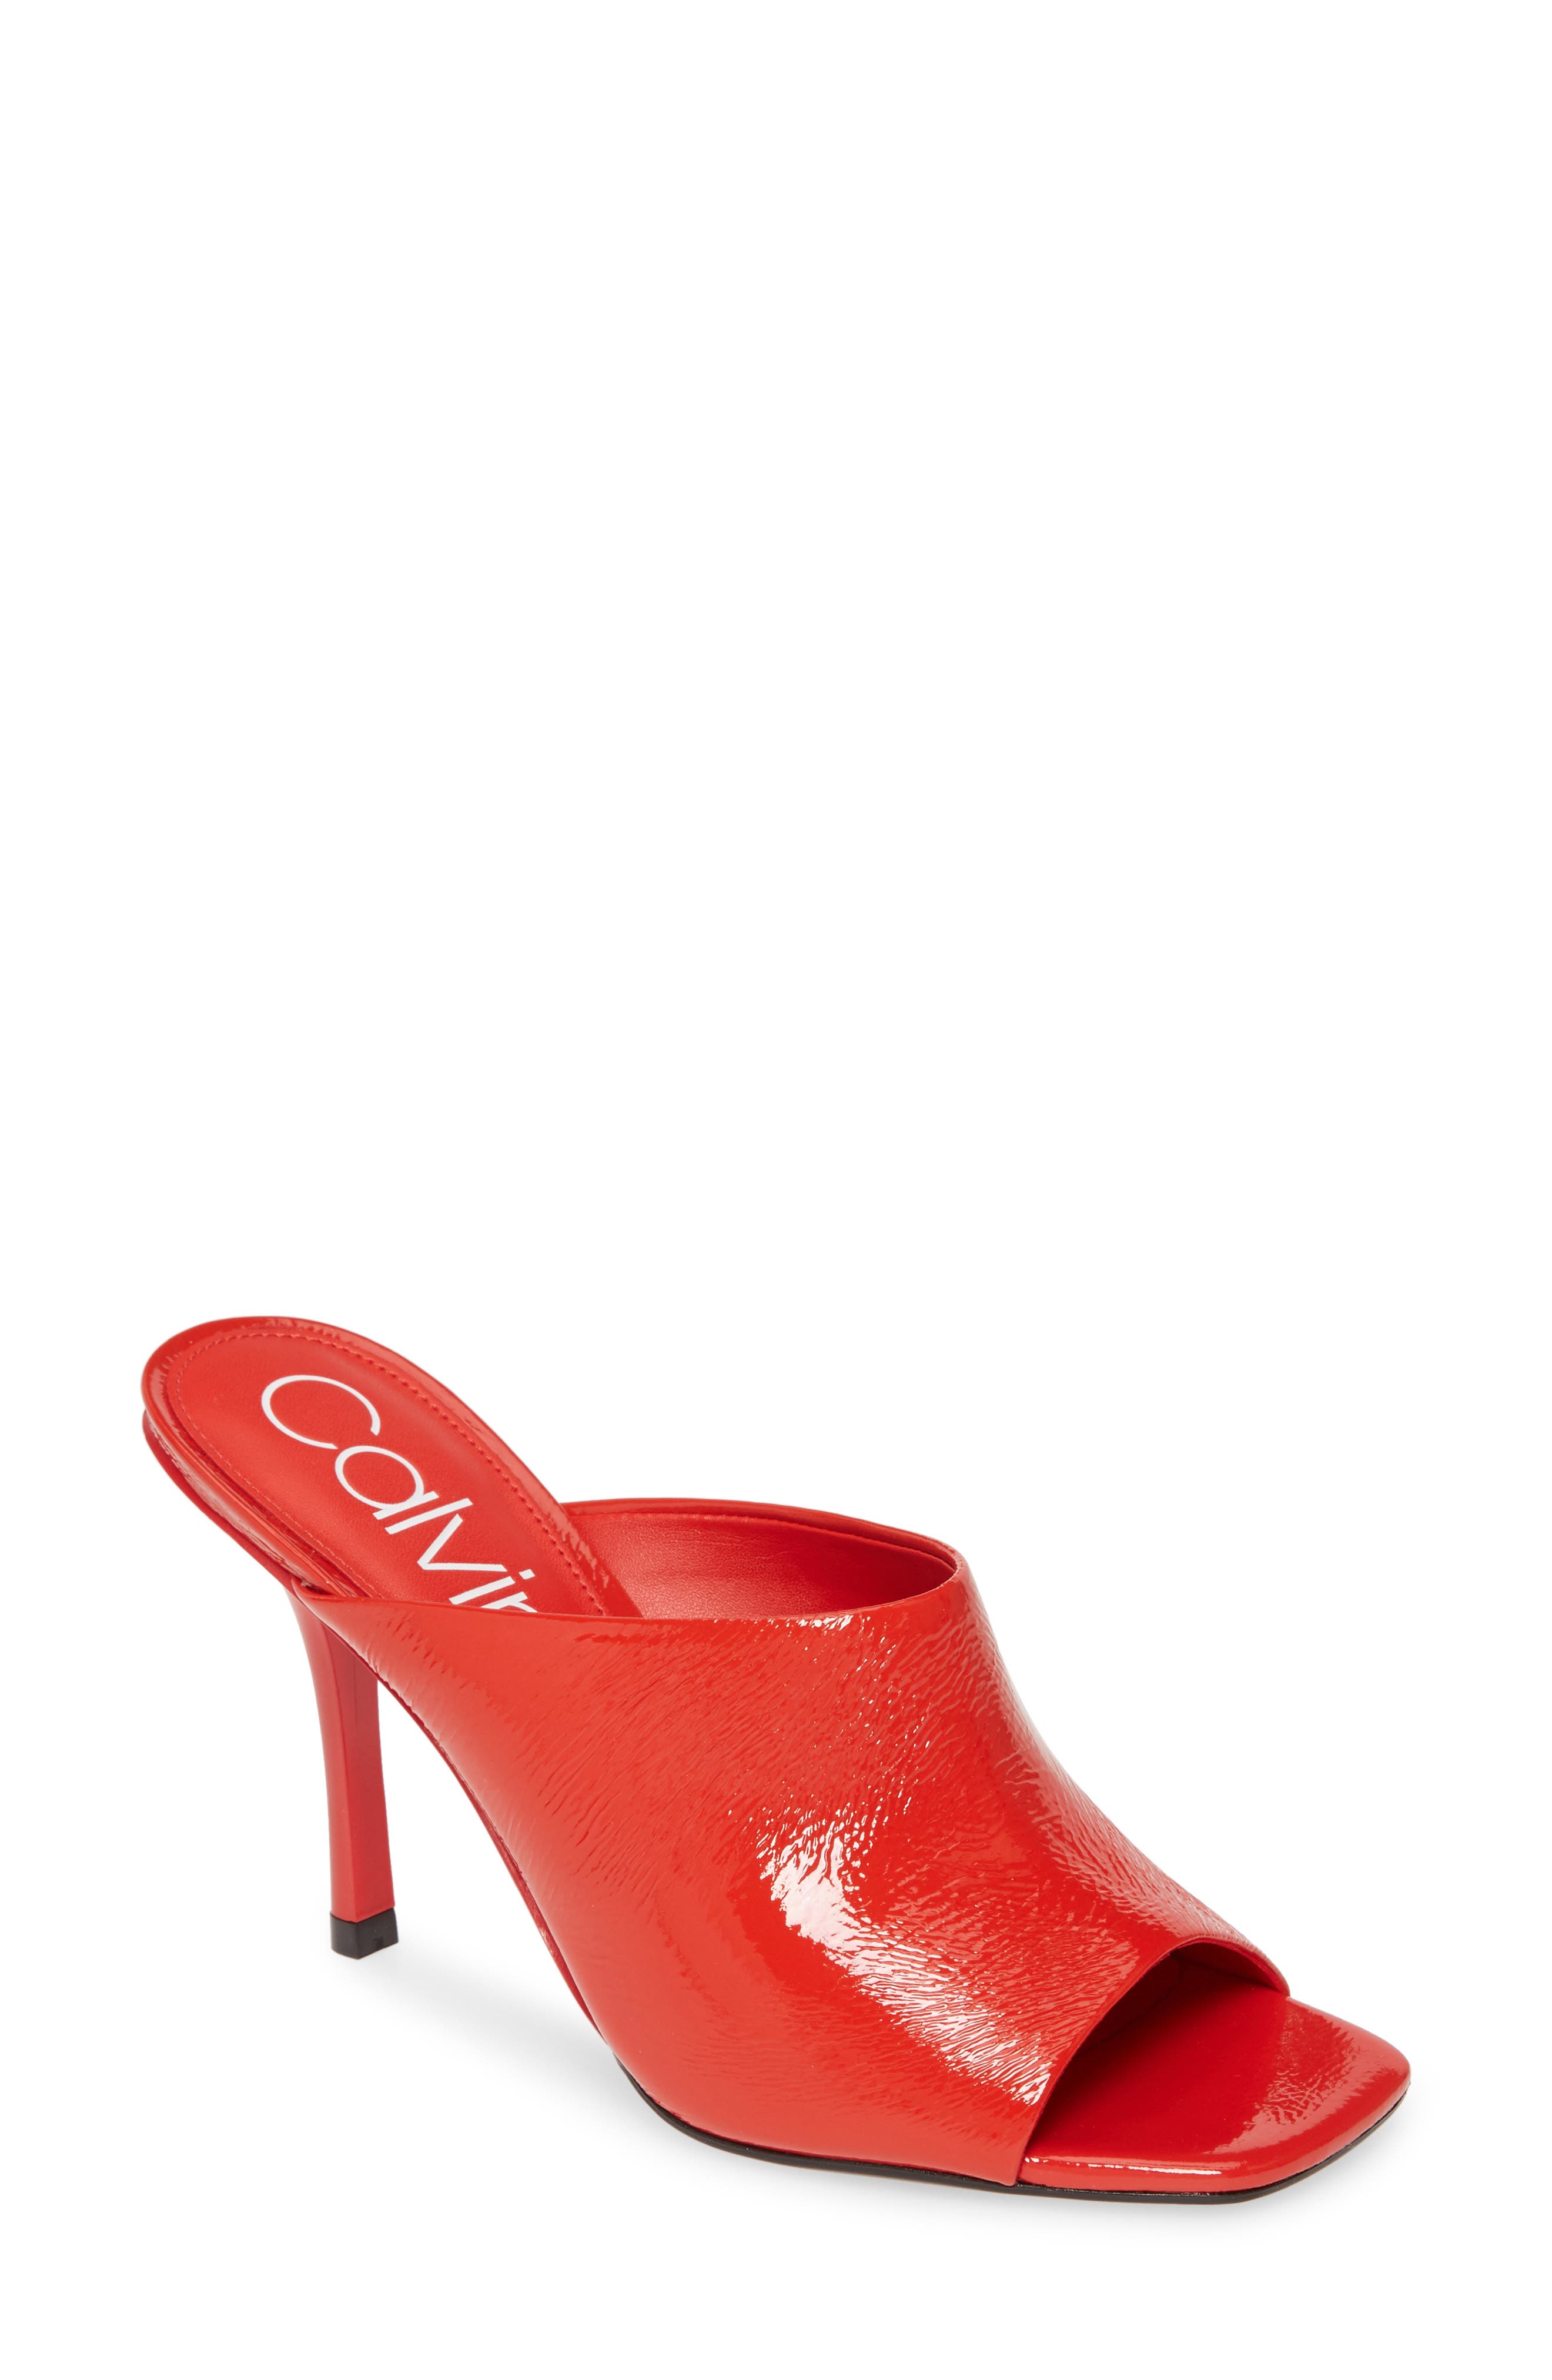 UPC 194060133362 product image for Women's Calvin Klein Matos Sandal, Size 9 M - Red | upcitemdb.com